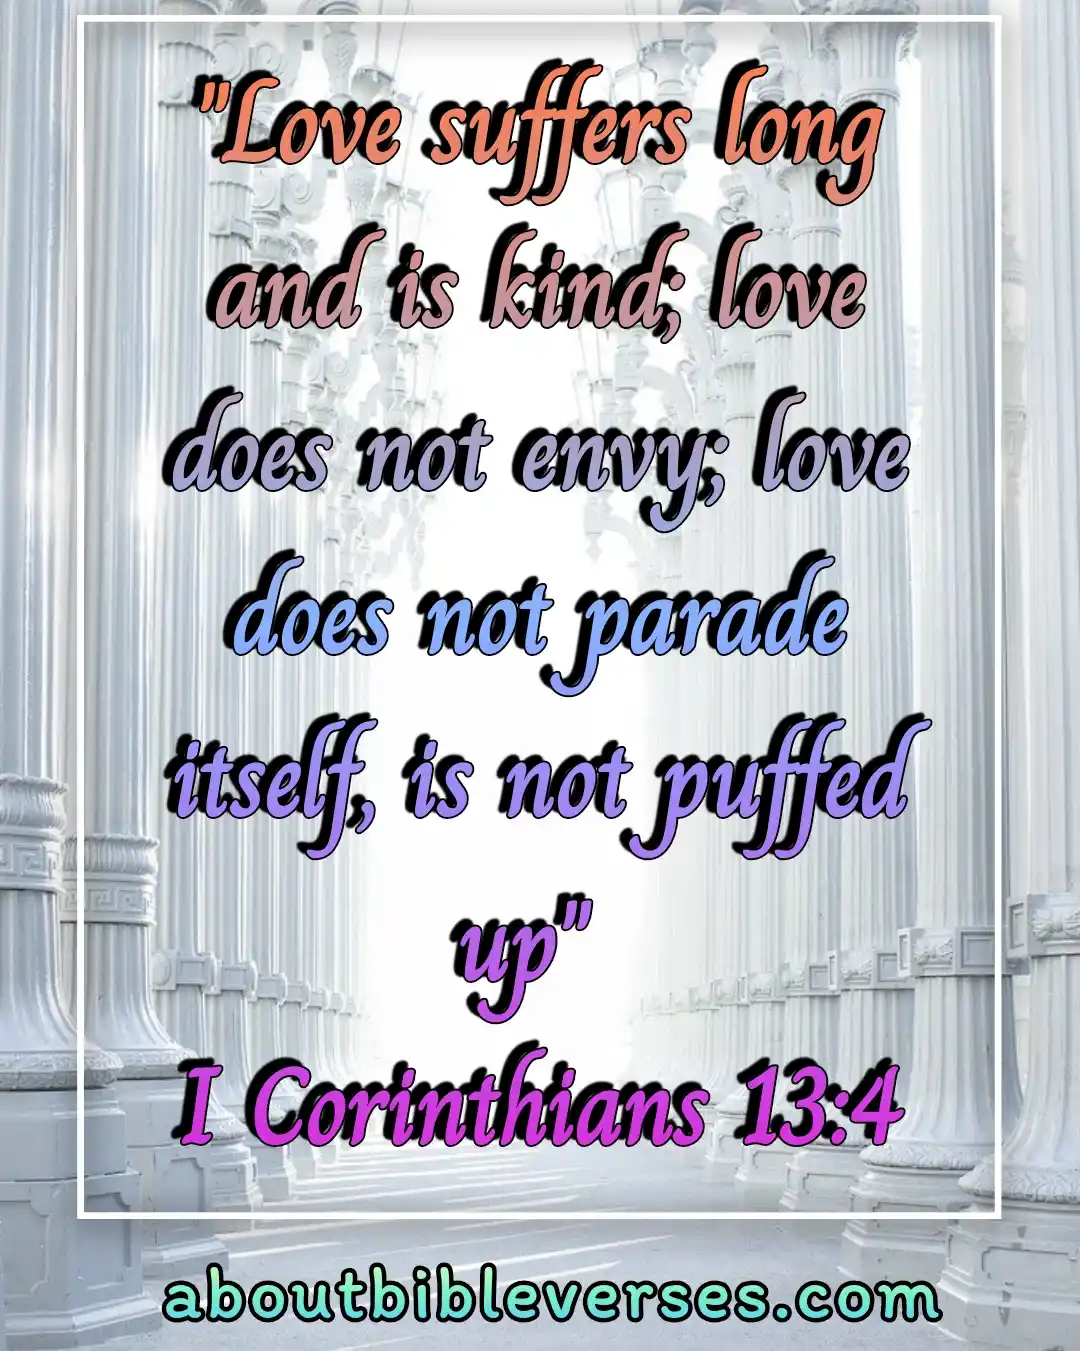 Bible Verses About Attitude Towards Others (1 Corinthians 13:4)